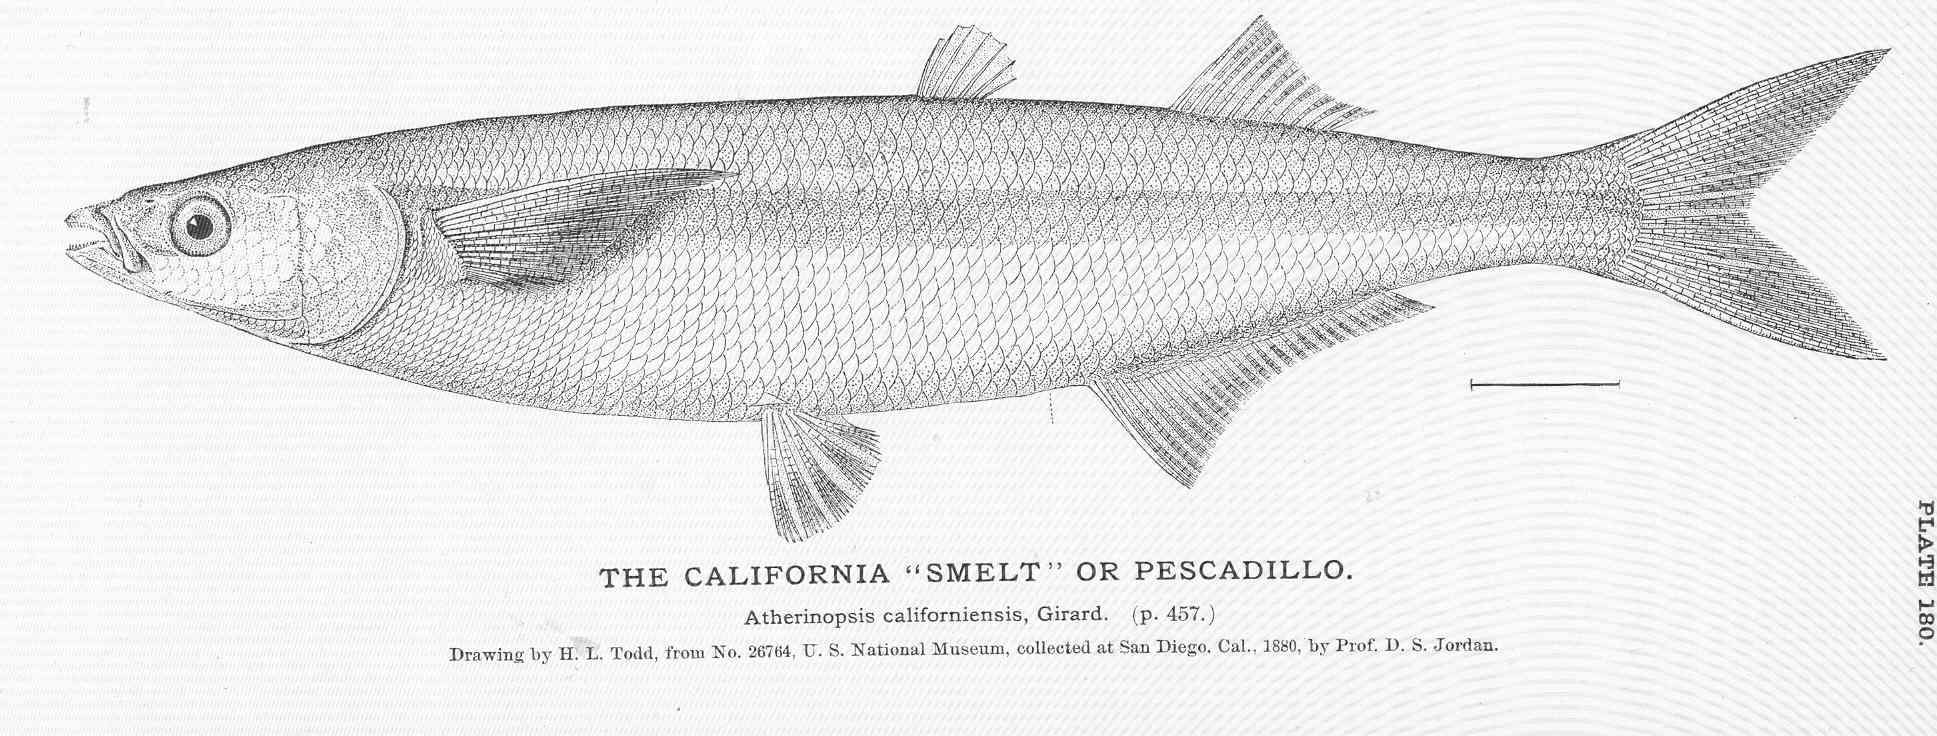 File:FMIB 51053 California Smelt or Pescadillo.jpeg - Wikimedia Commons